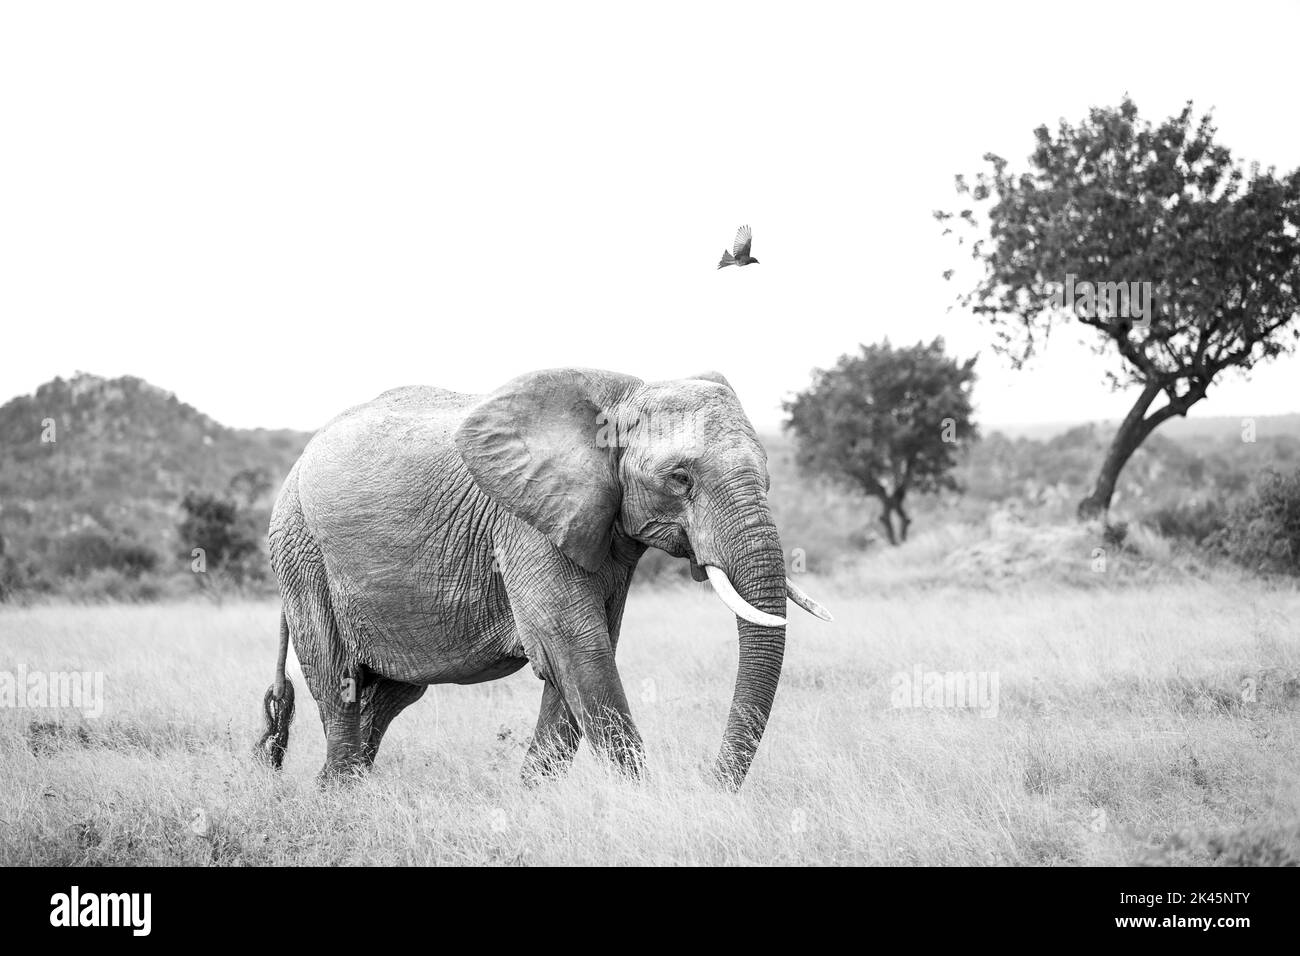 An elephant, Loxodonta africana, walks through grass as a Fork-tailed drongo,Dicrurus adsimilis, flies over him, in colour Stock Photo